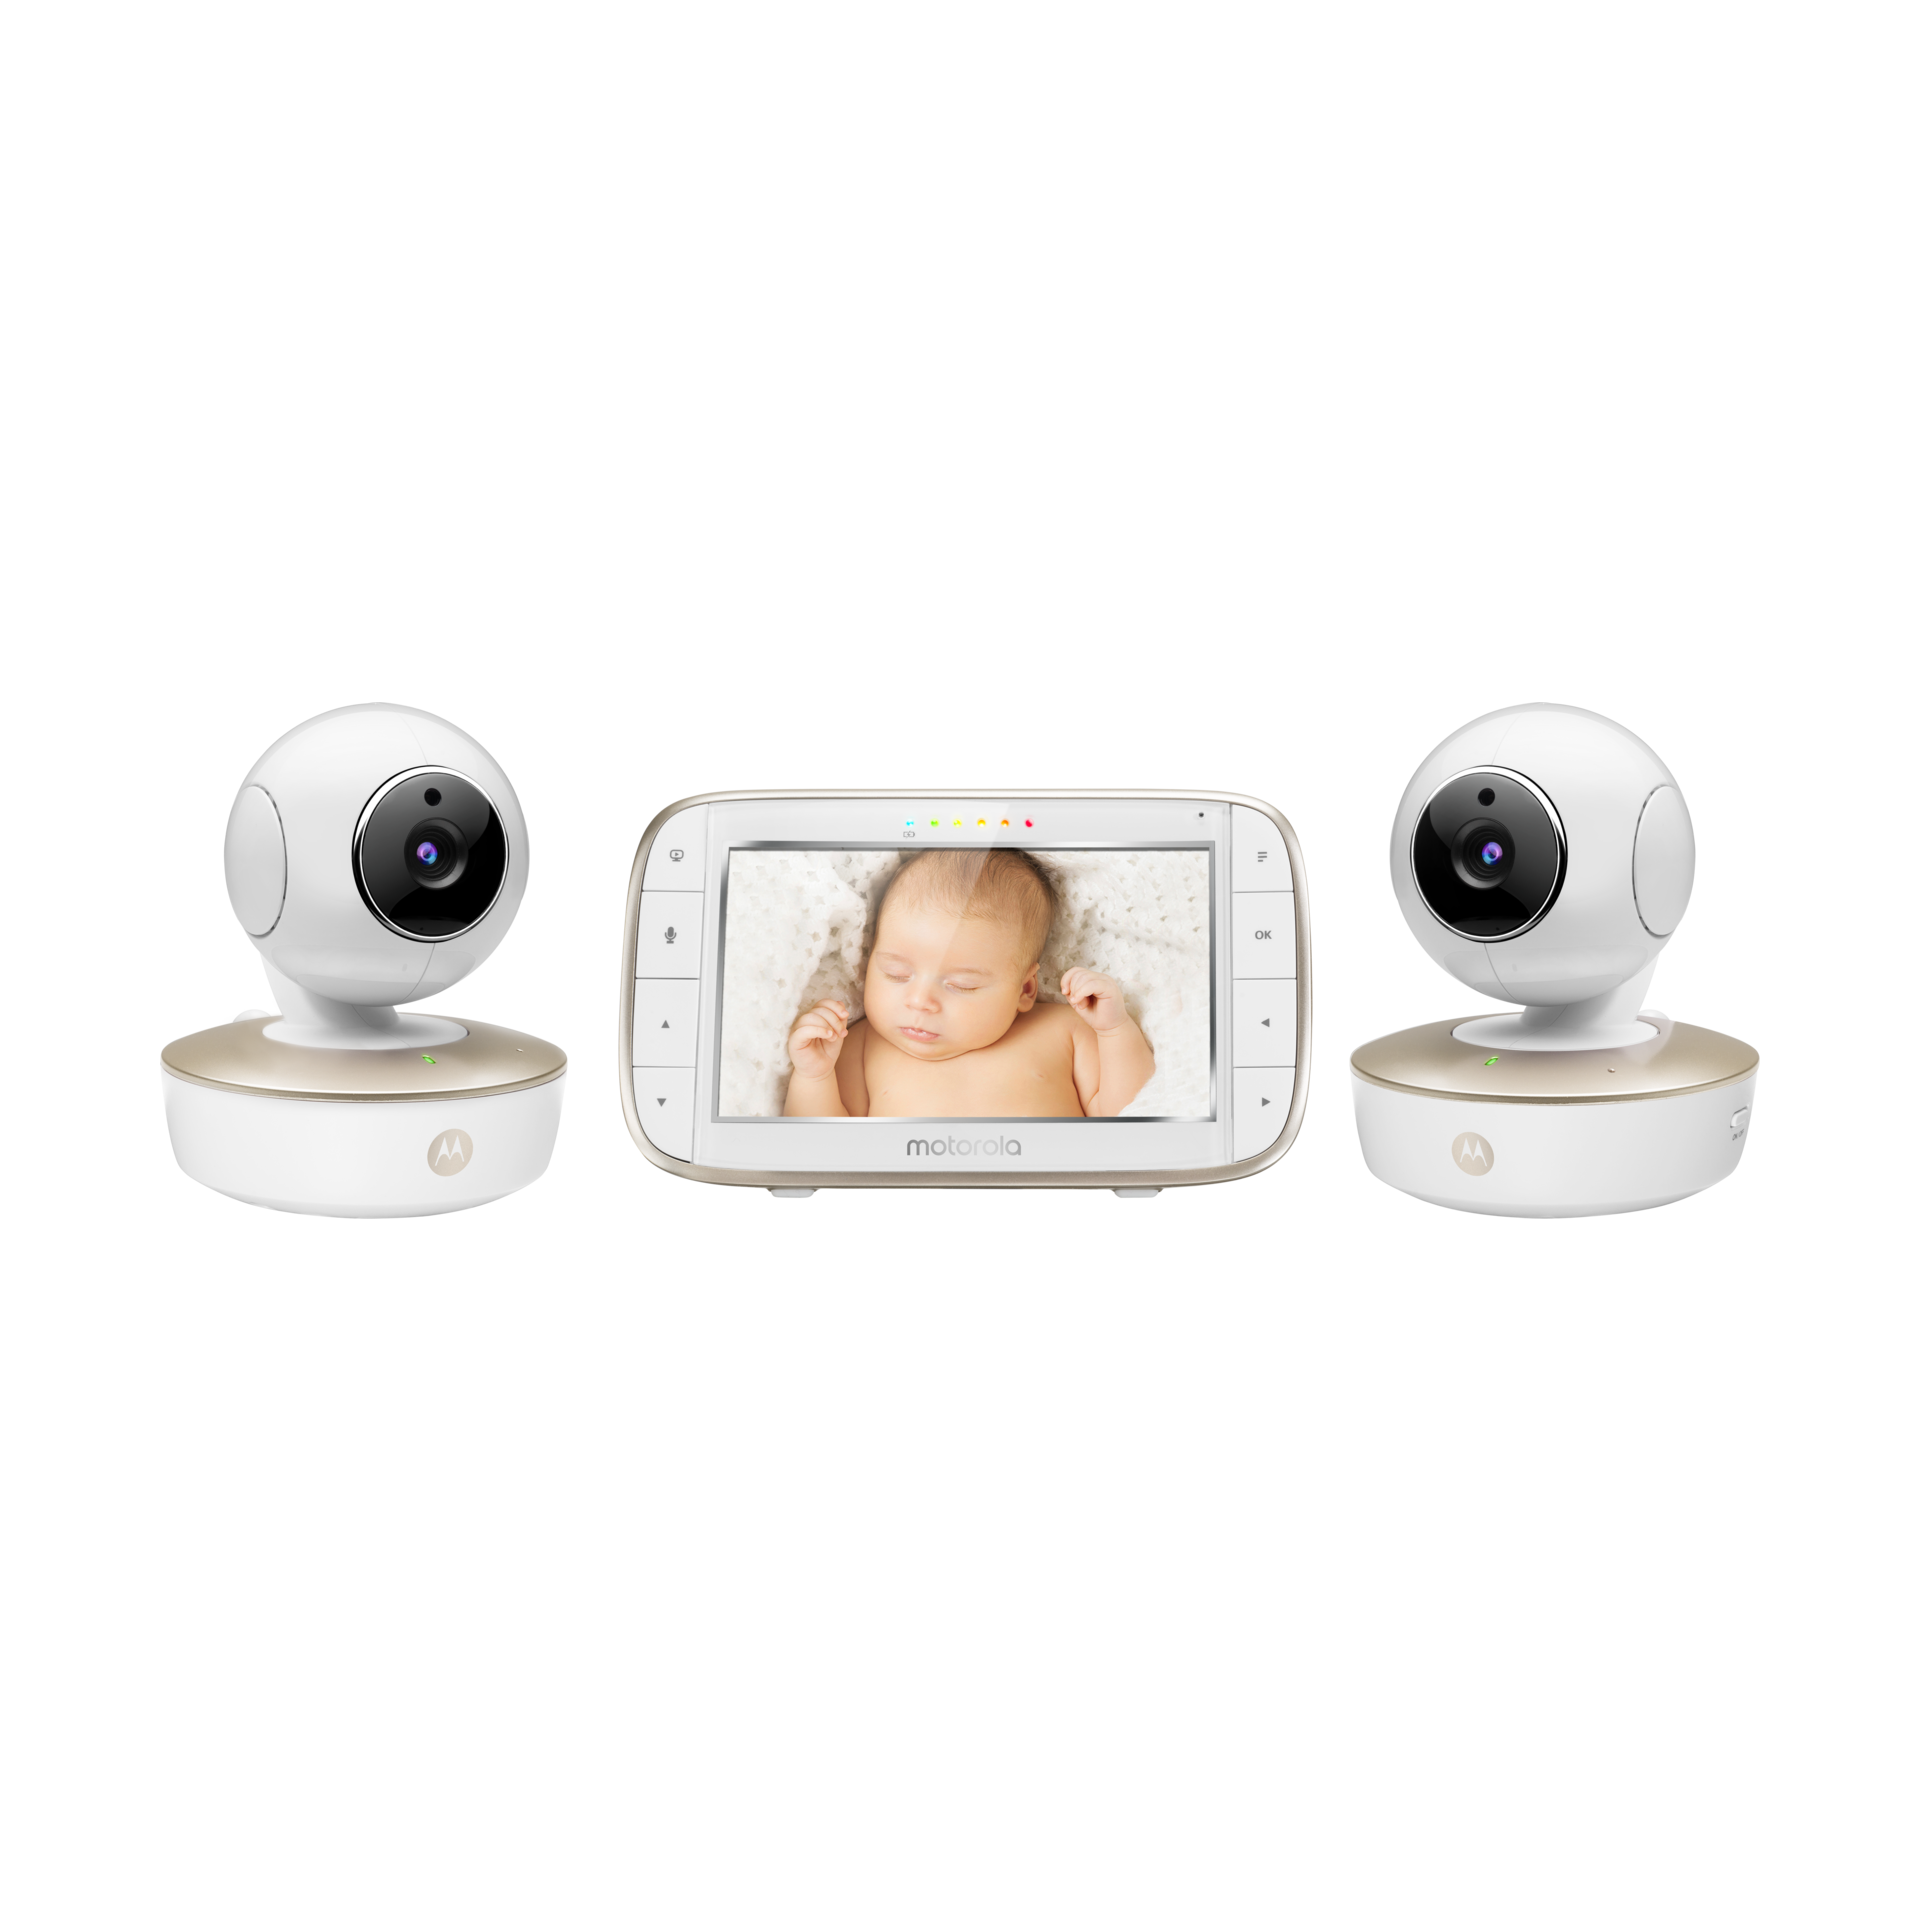 motorola 2 camera baby monitor